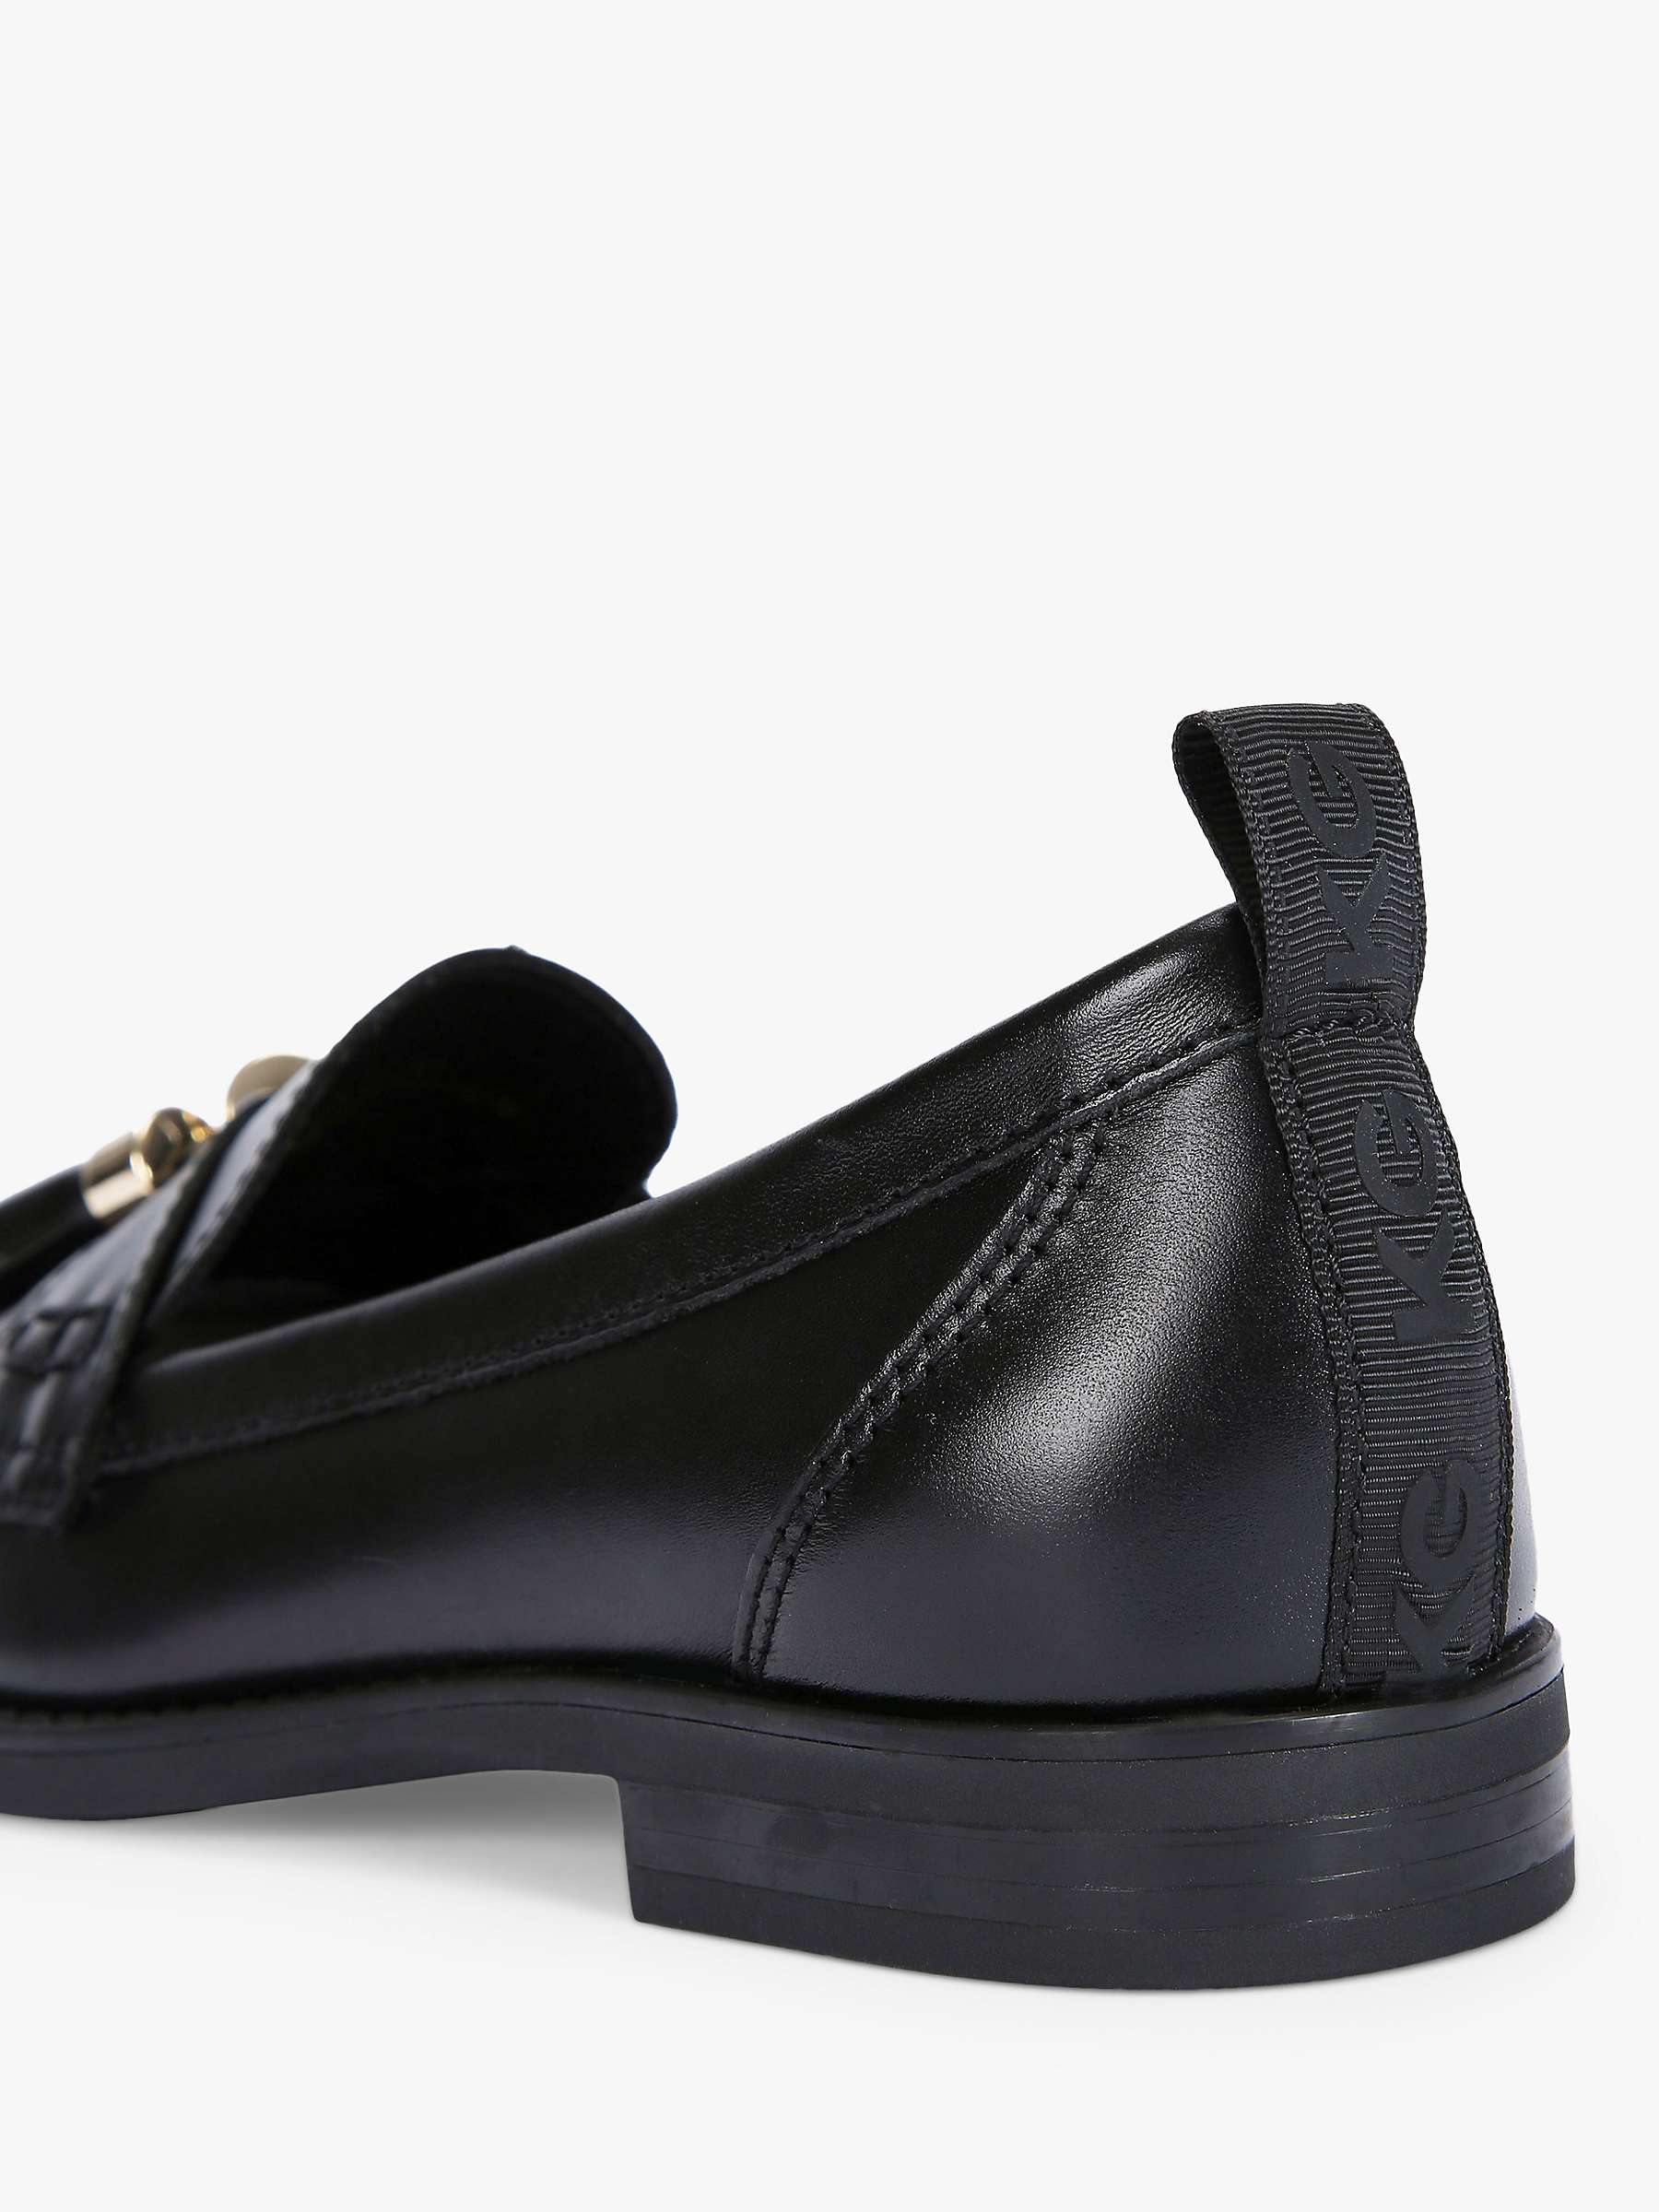 Buy KG Kurt Geiger Mia Leather Tassle Loafers Online at johnlewis.com